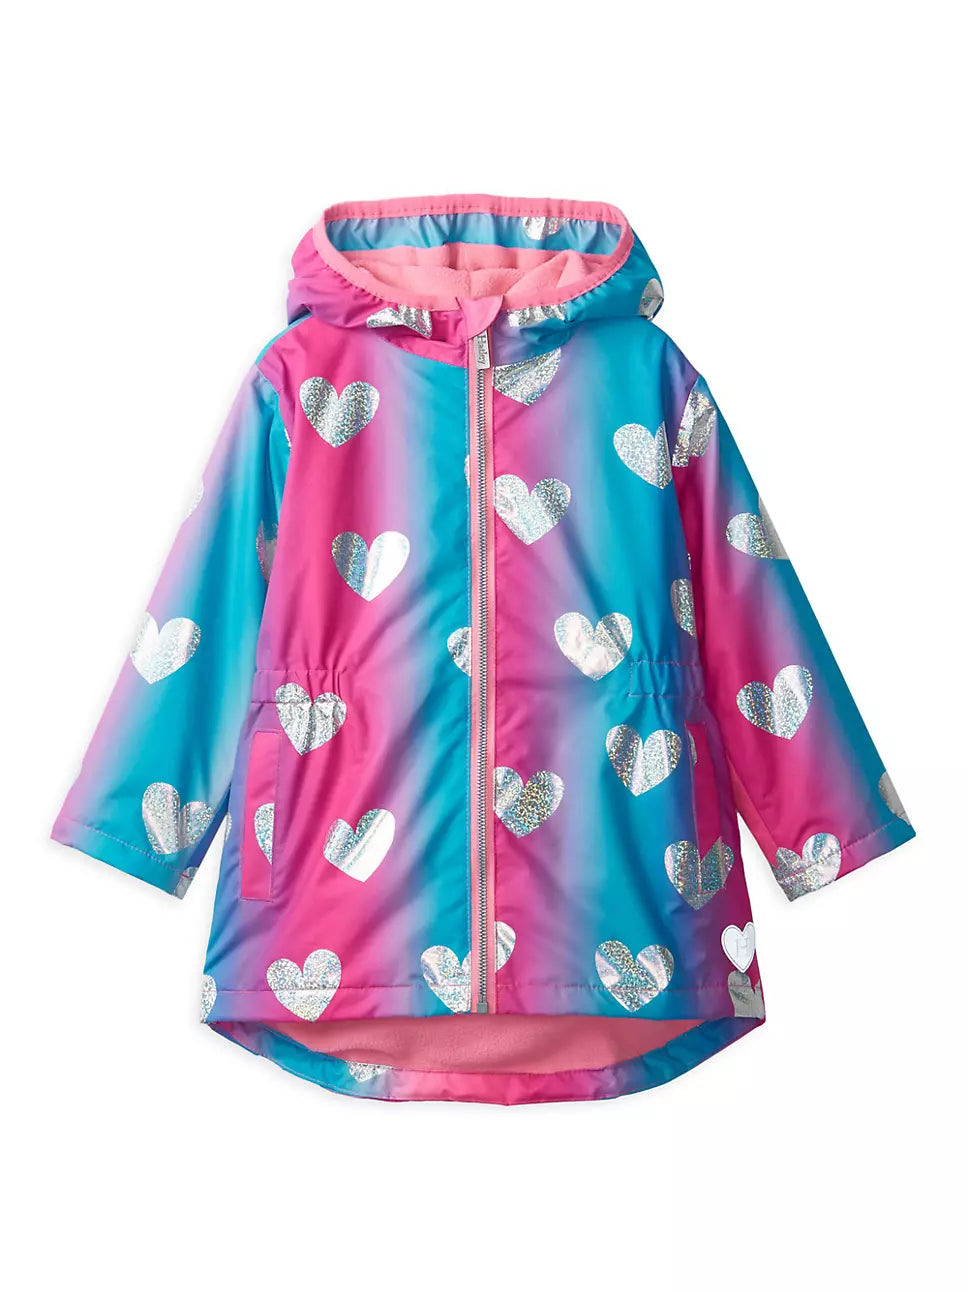 Fun Hearts Microfiber Raincoat